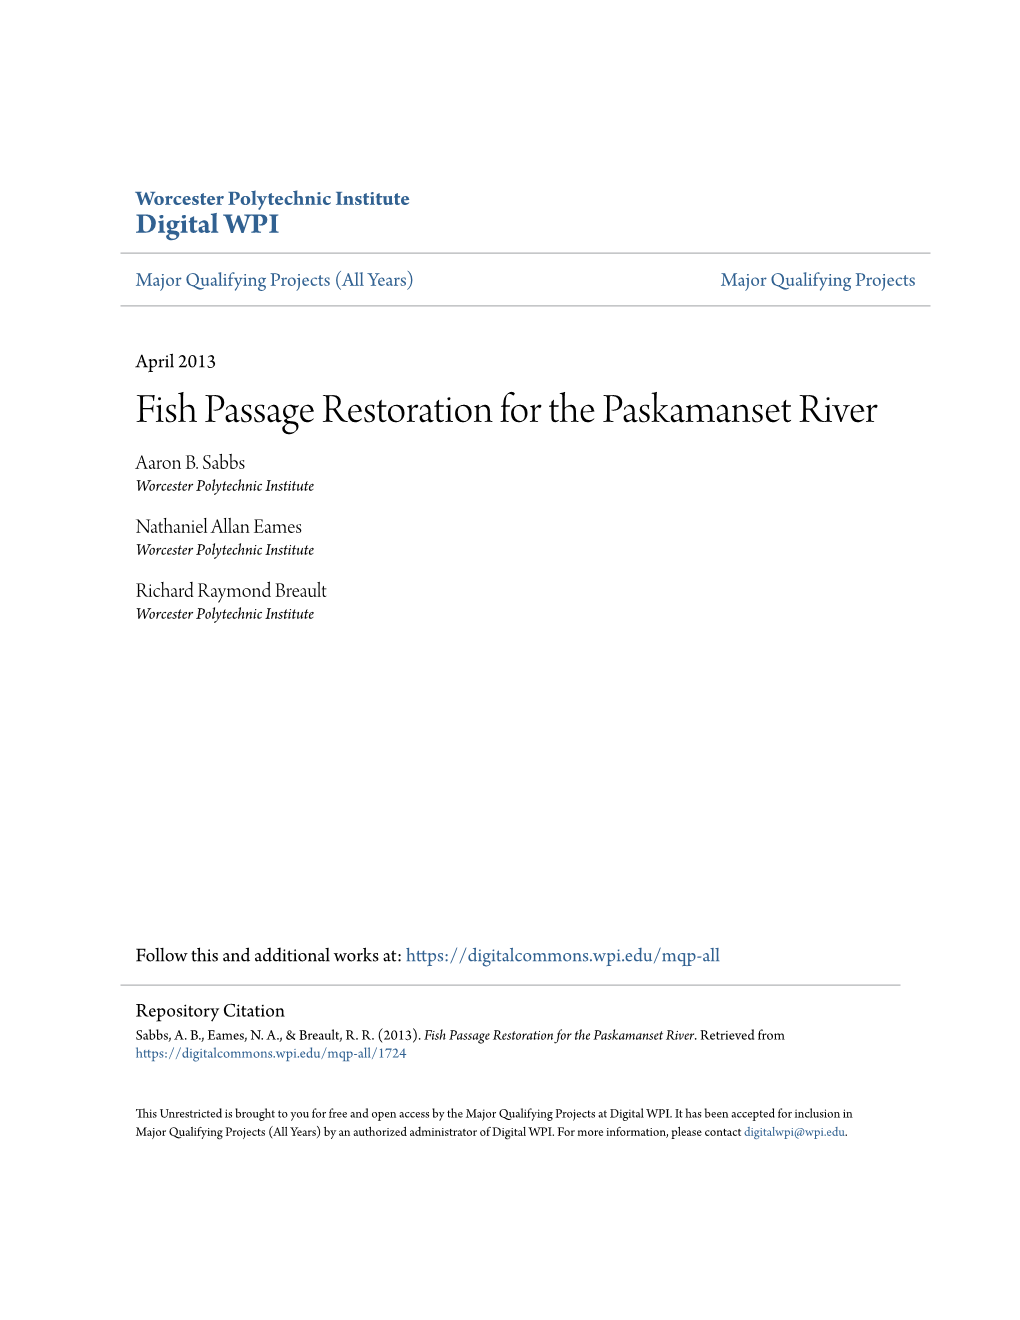 Fish Passage Restoration for the Paskamanset River Aaron B